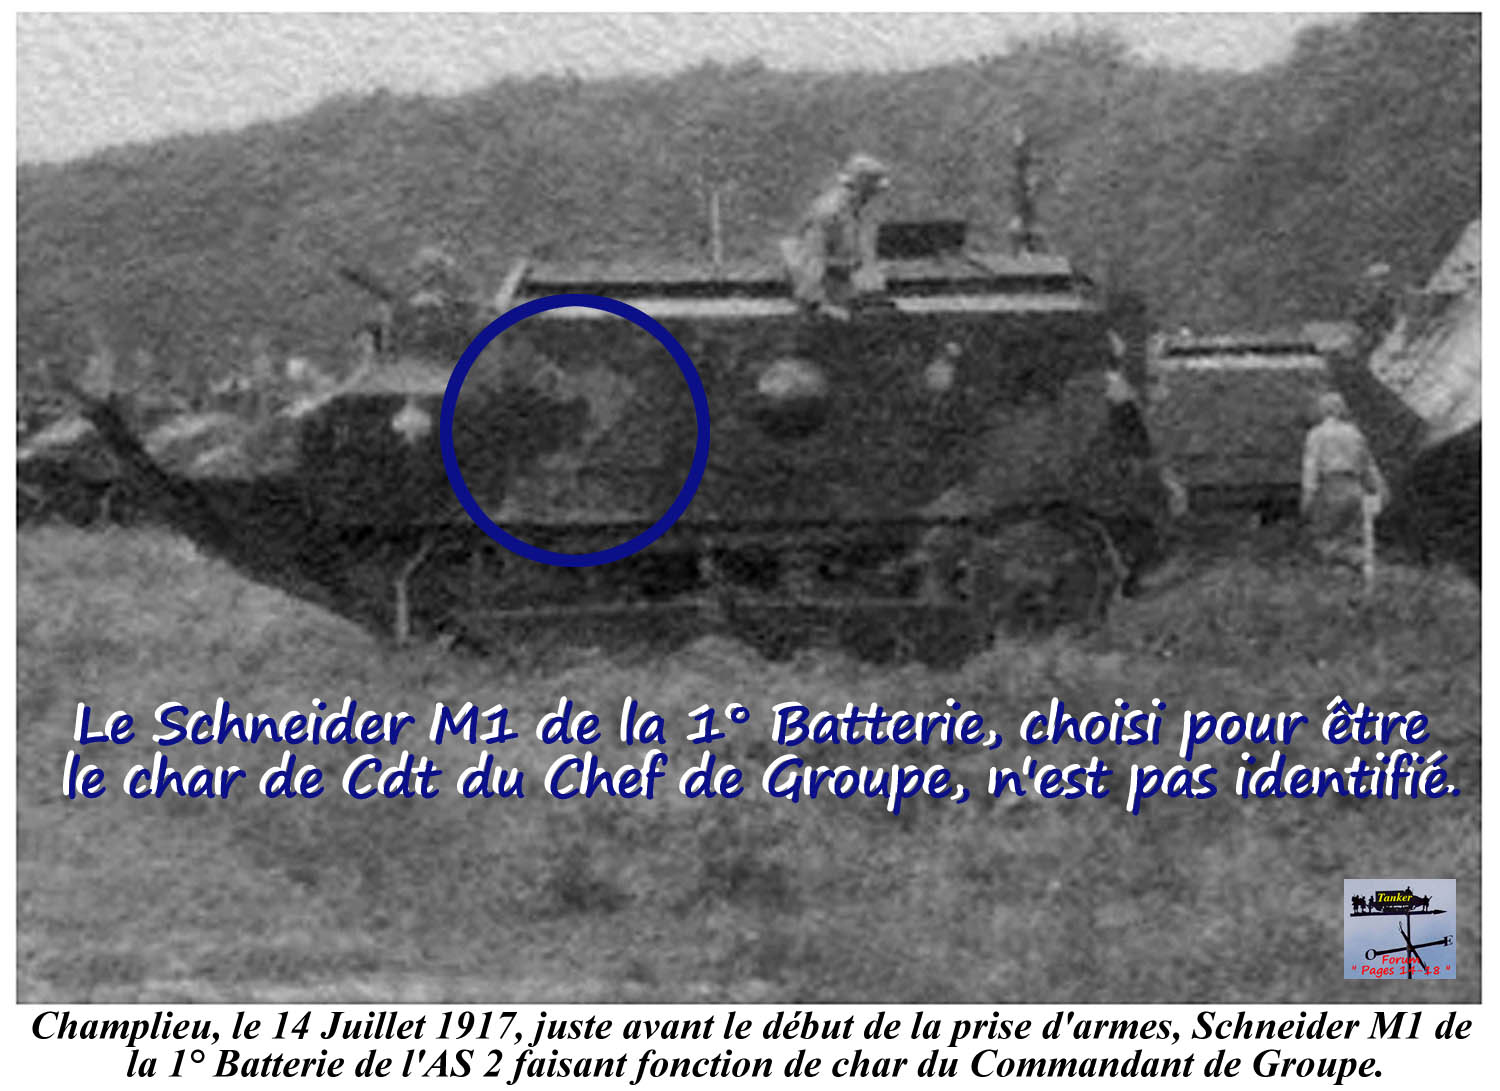 09 - Grpt I - AS 2 - Schneider M1 AsPx n° 61xxx - 09a.jpg